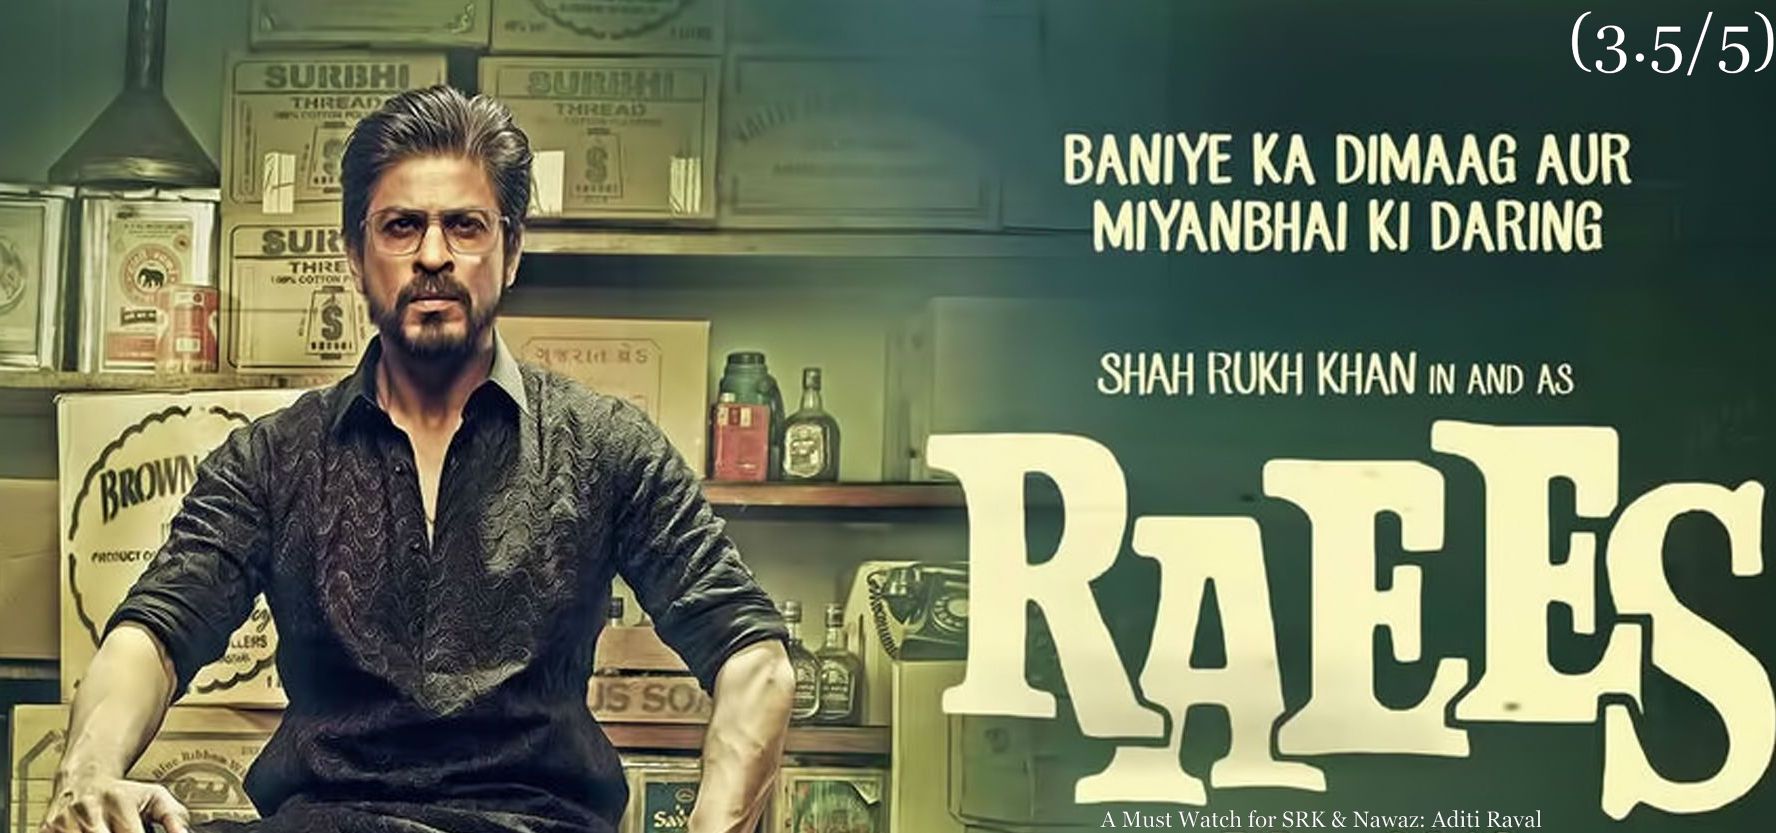 Gujarati · Movie review · Raees · Shah Rukh Khan